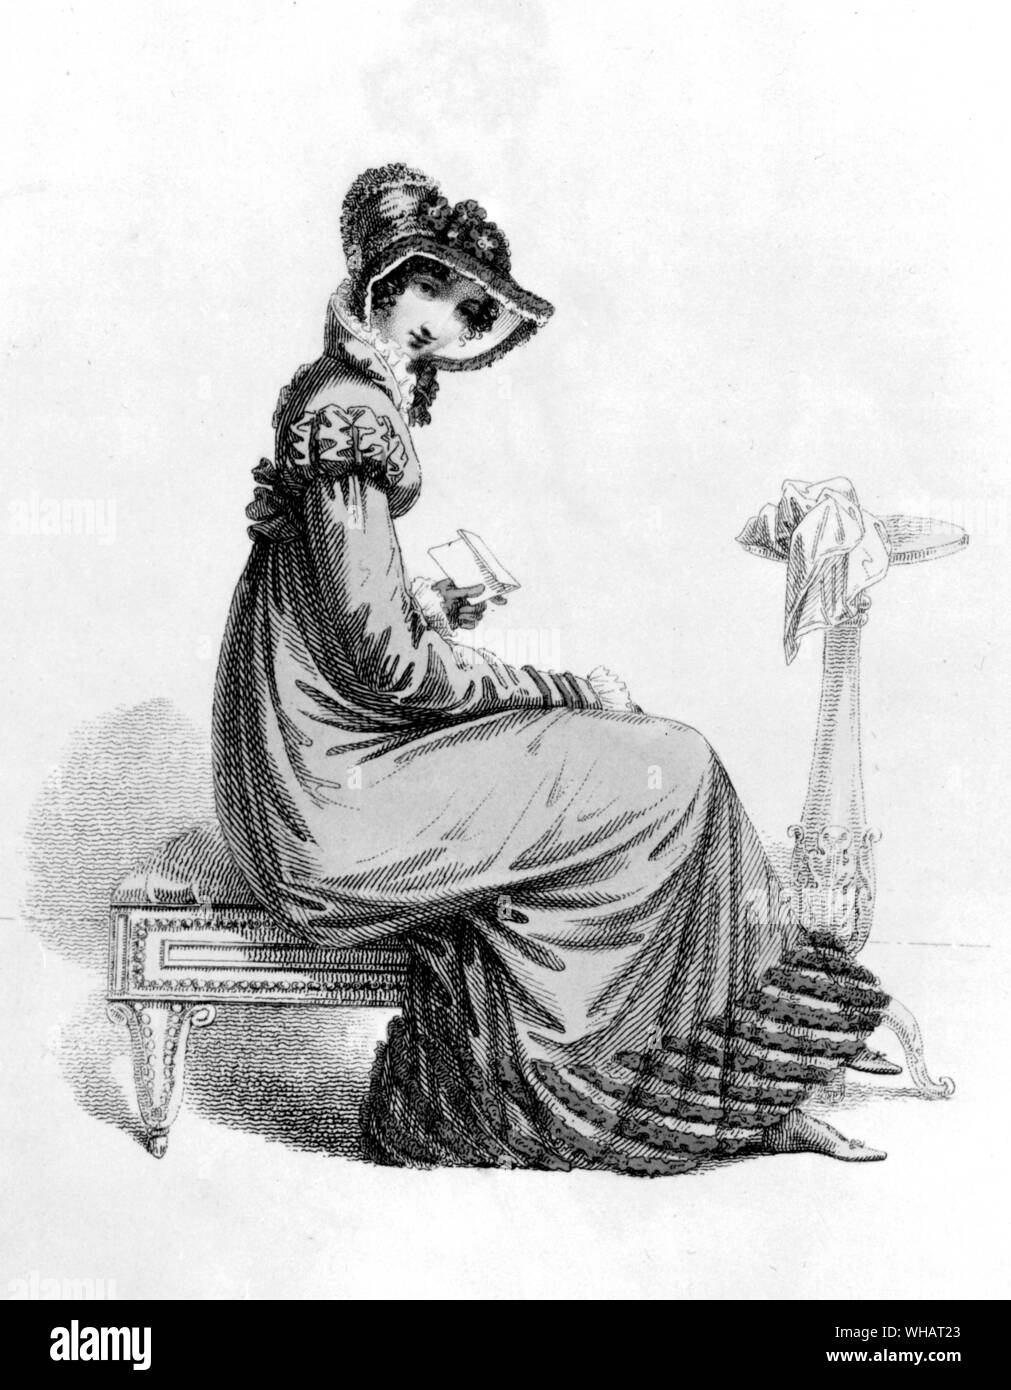 Environ 1818 costumes. Womens fashion. Anglais / Français Banque D'Images